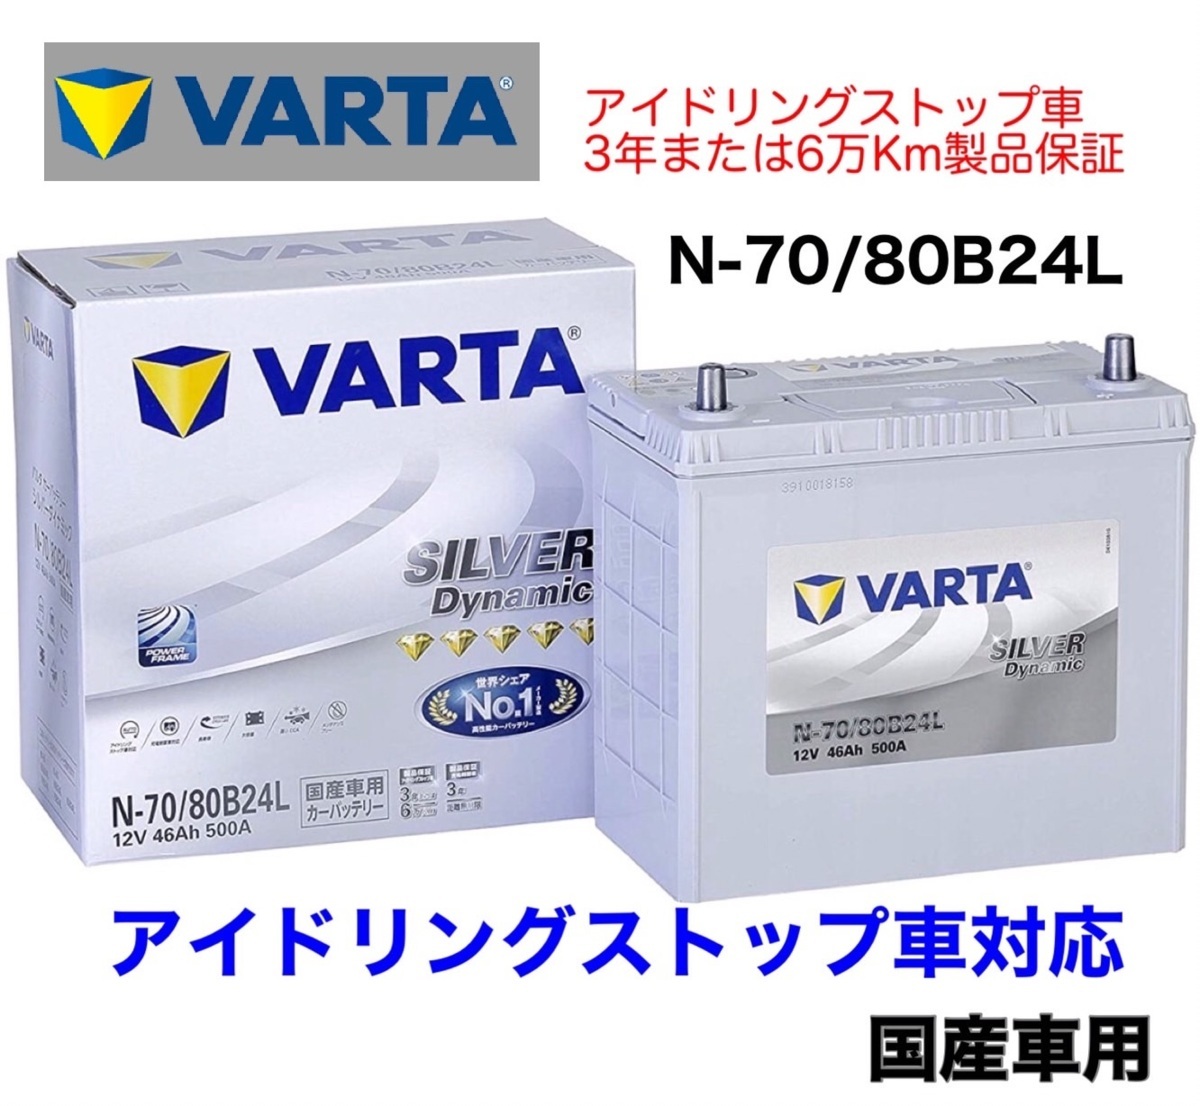 VARTA N-70 80B24L 新品 購入時の領収書付き